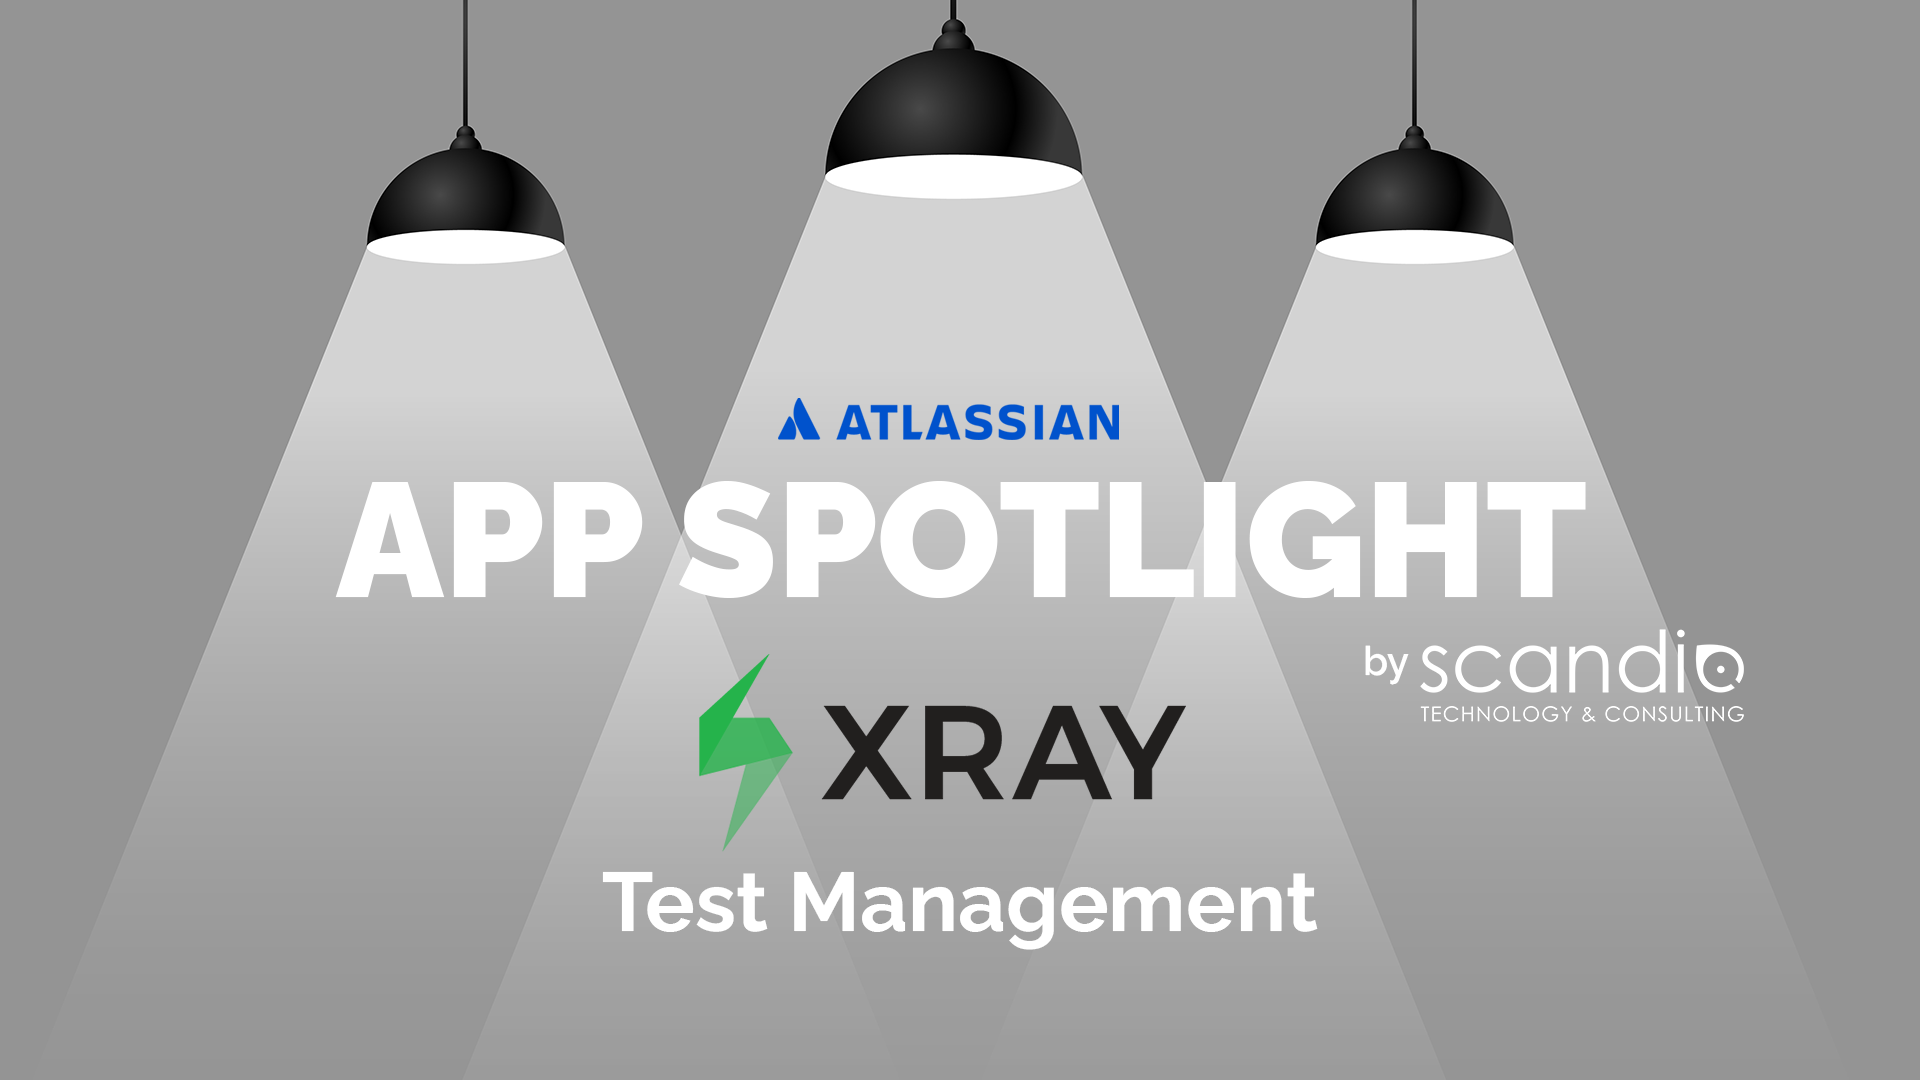 Atlassian App Spotlight: Xray Test Management